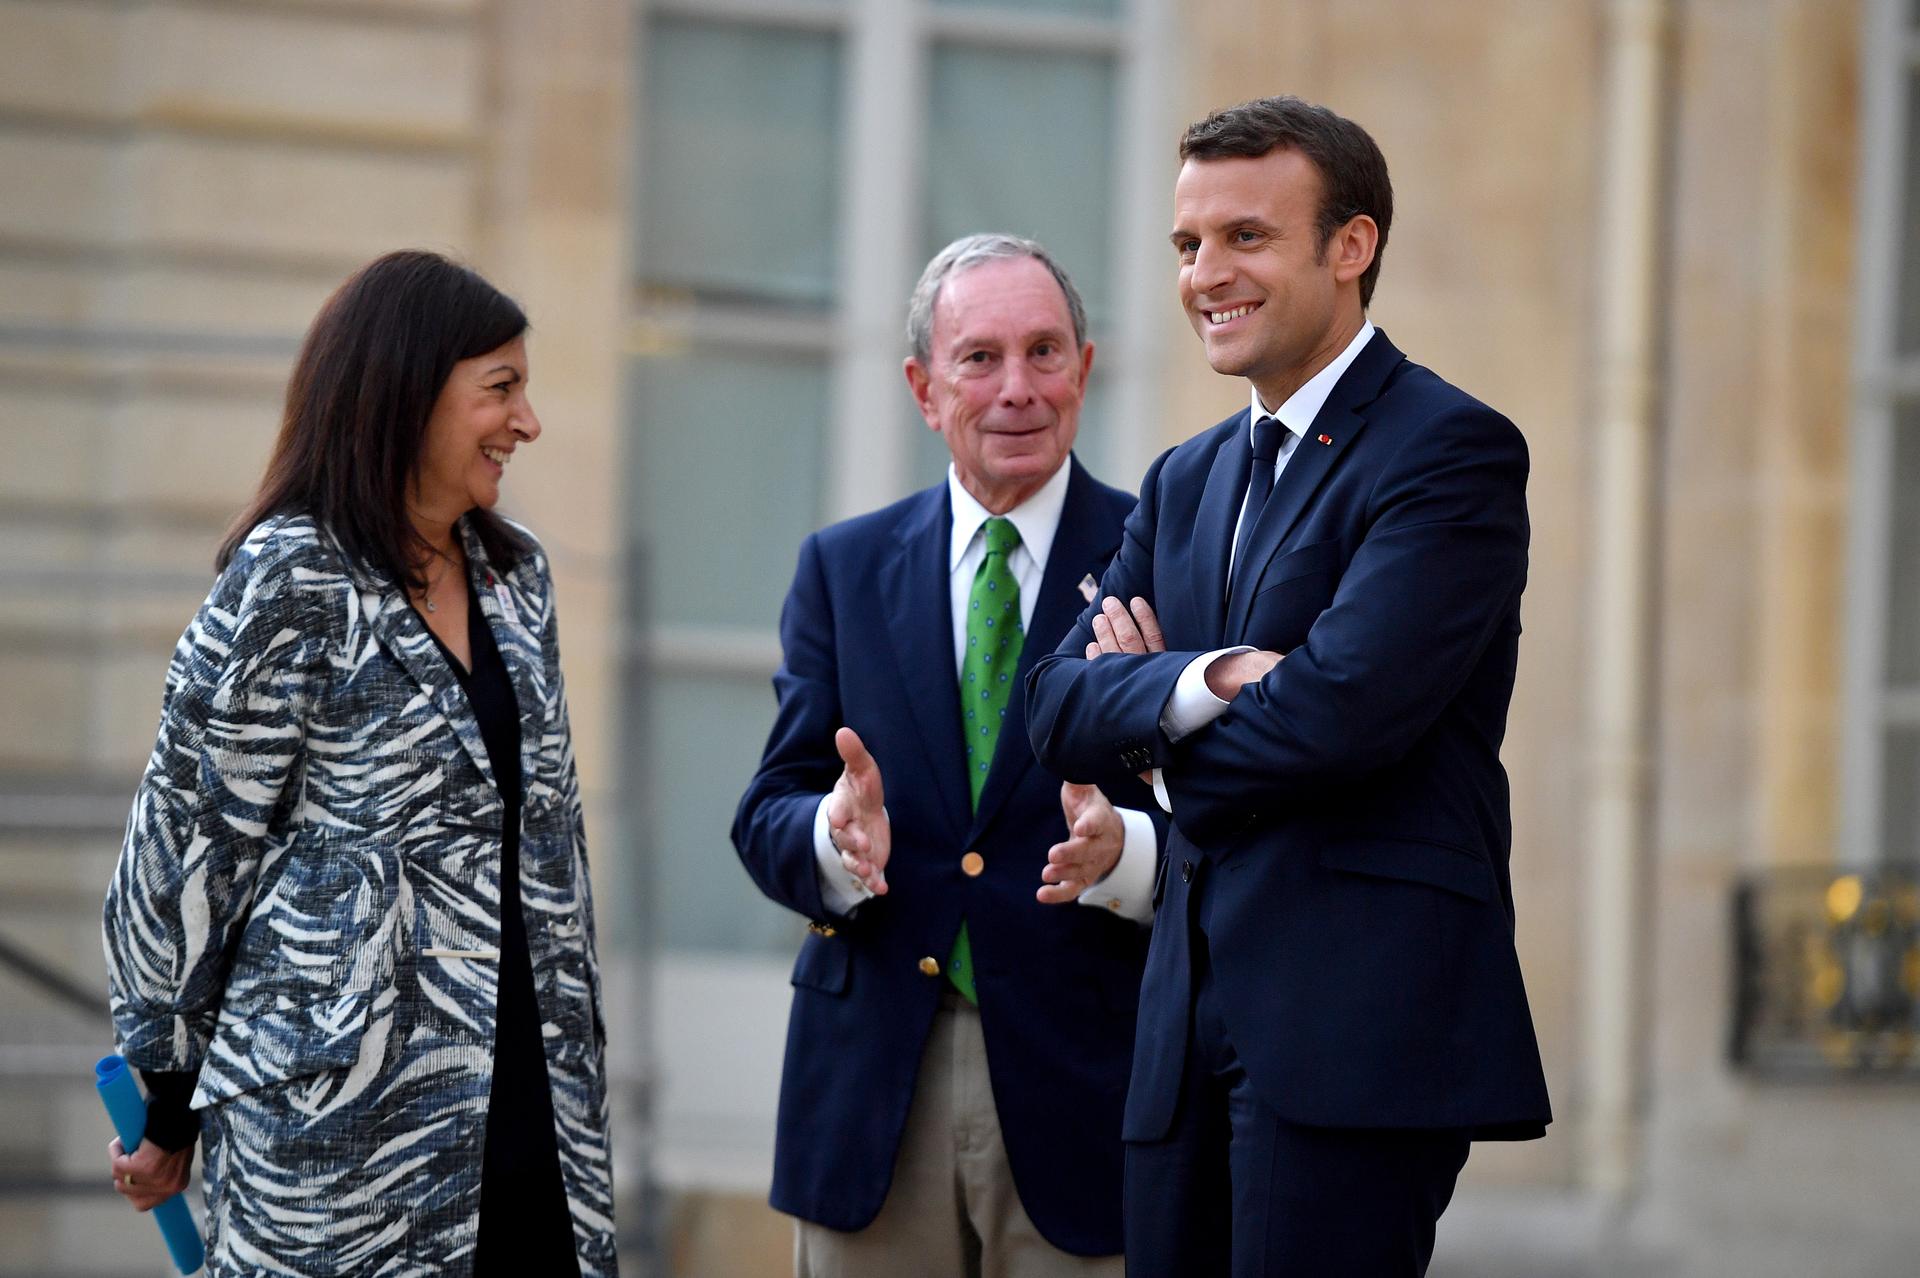 French President Emmanuel Macron, right, Paris Mayor Anne Hidalgo and former mayor of New York City Michael Bloomberg